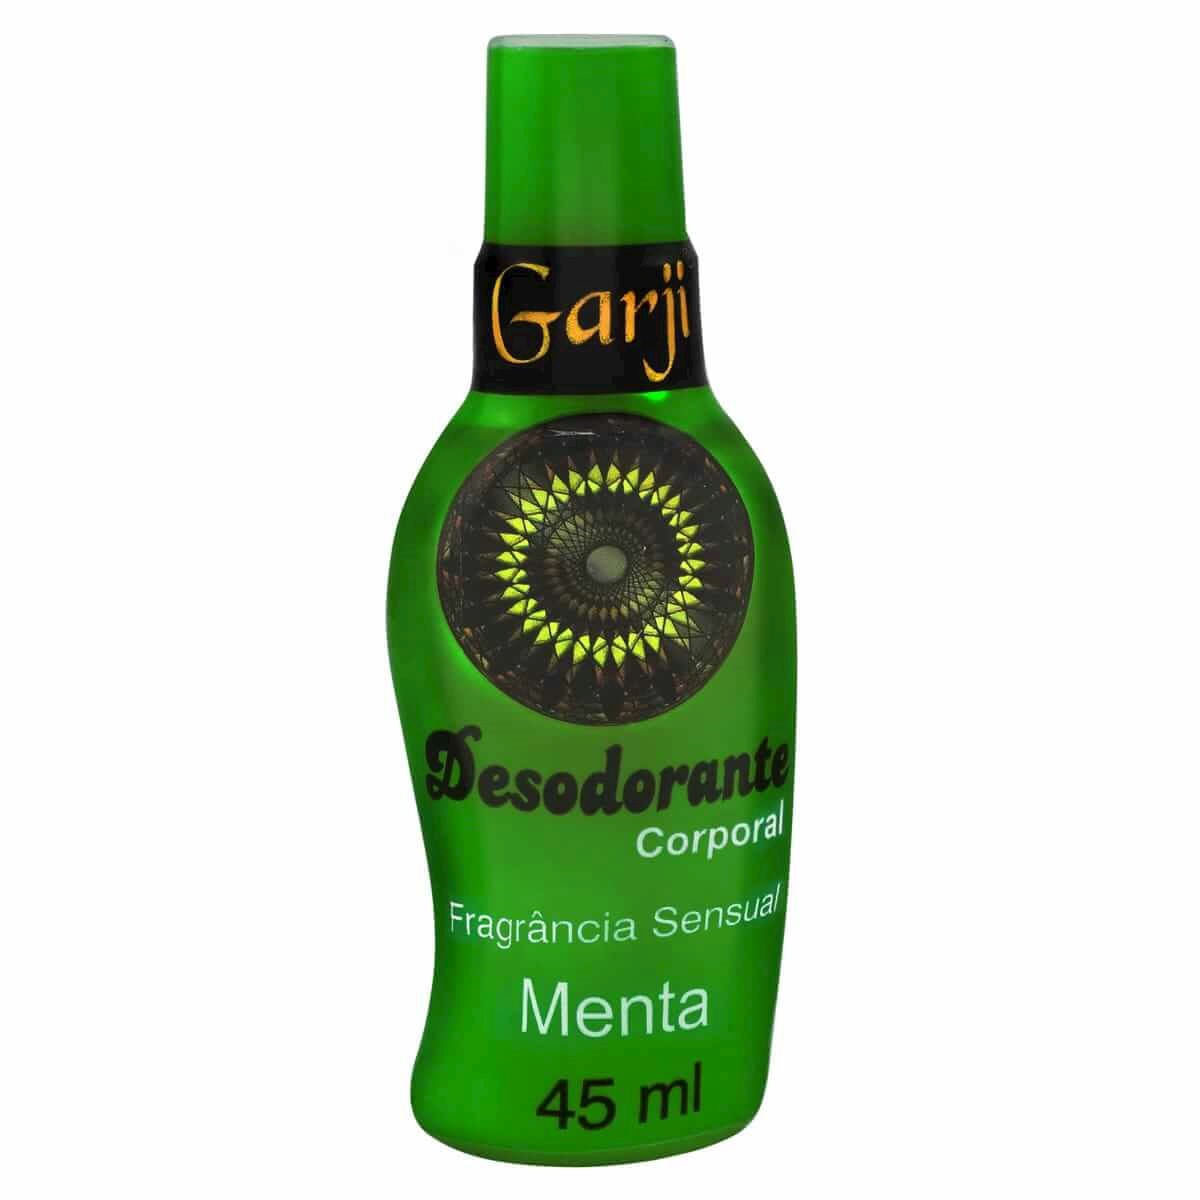 Desodorante Corporal de Menta 45ml Garji